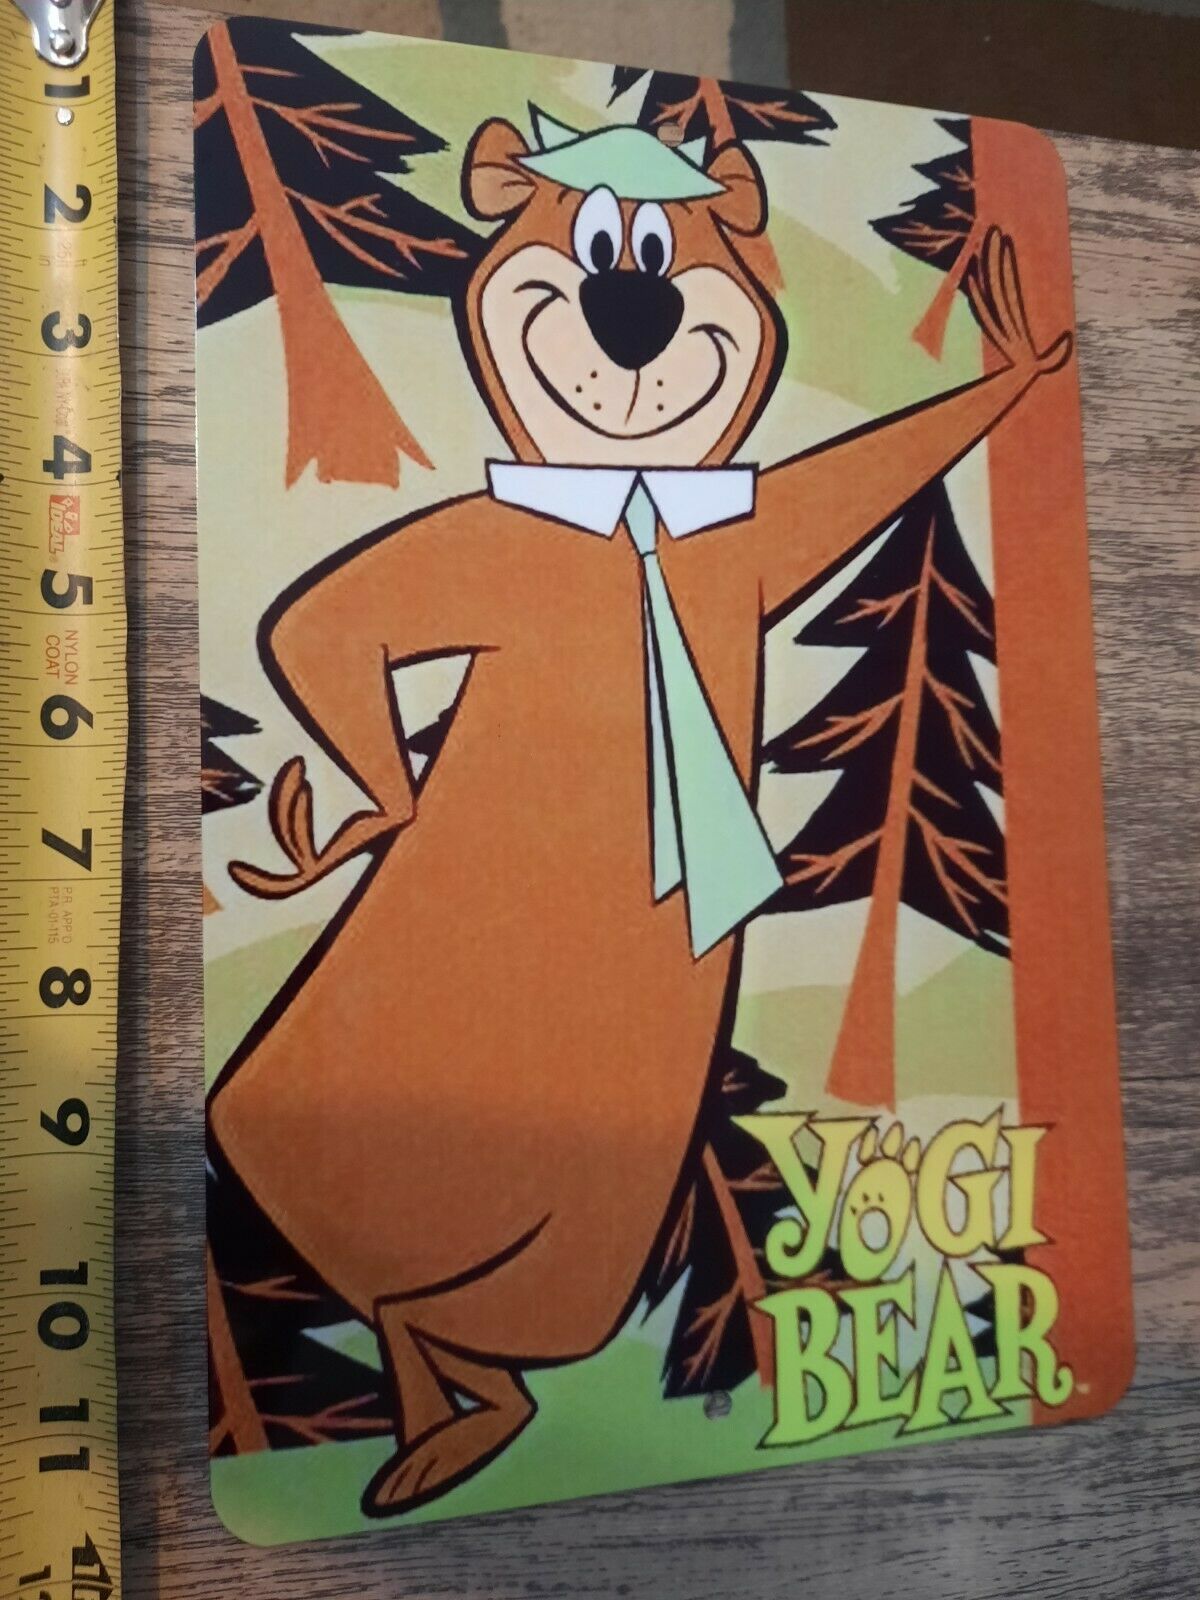 Yogi Bear 8x12 Metal Wall Sign Classic Cartoon Hanna Barbera